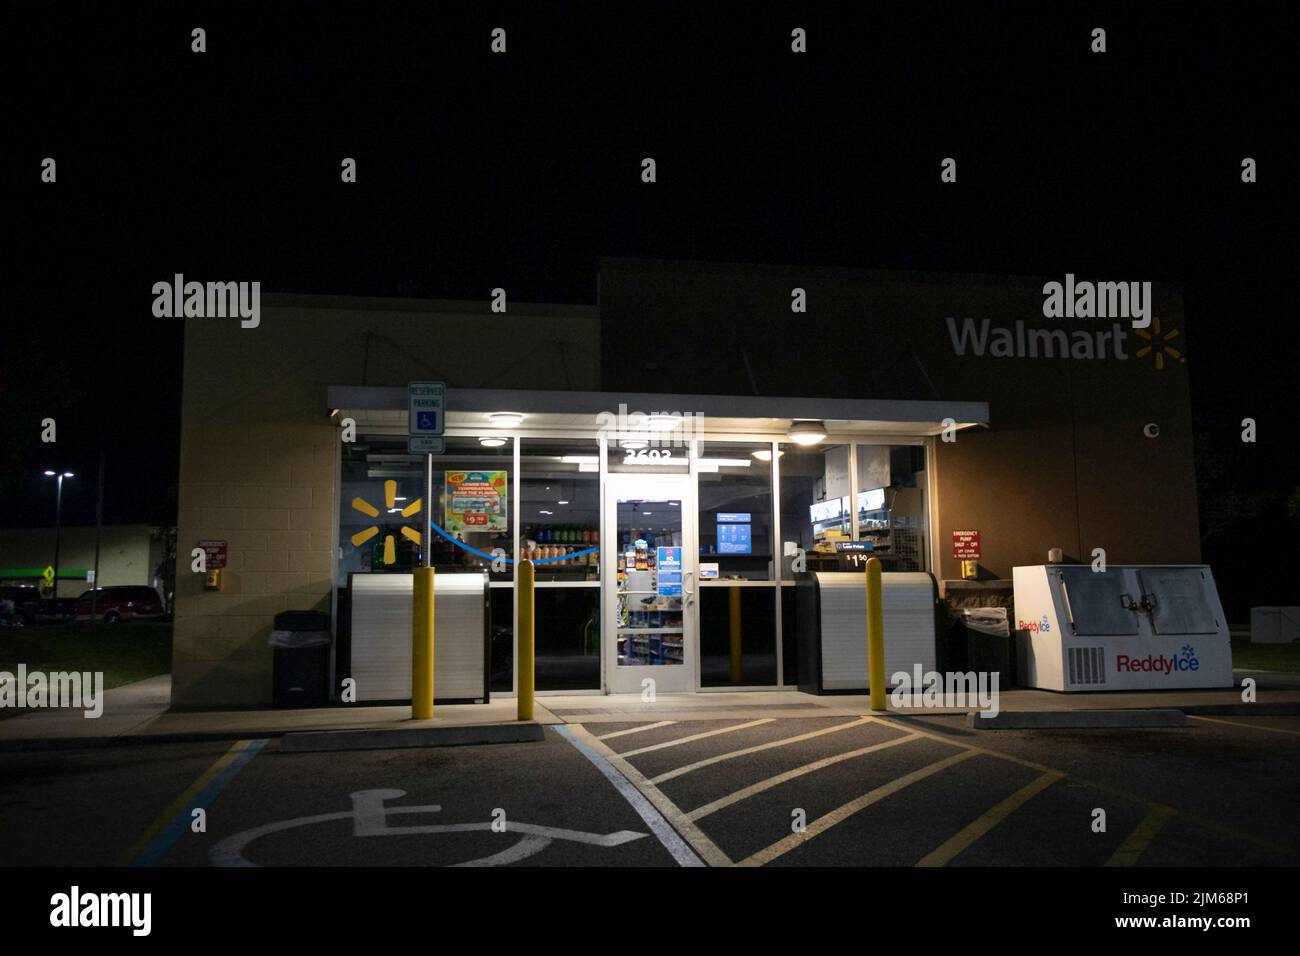 Augusta, Ga USA - 10 18 21: Walmart gas station retail store at night closed Stock Photo